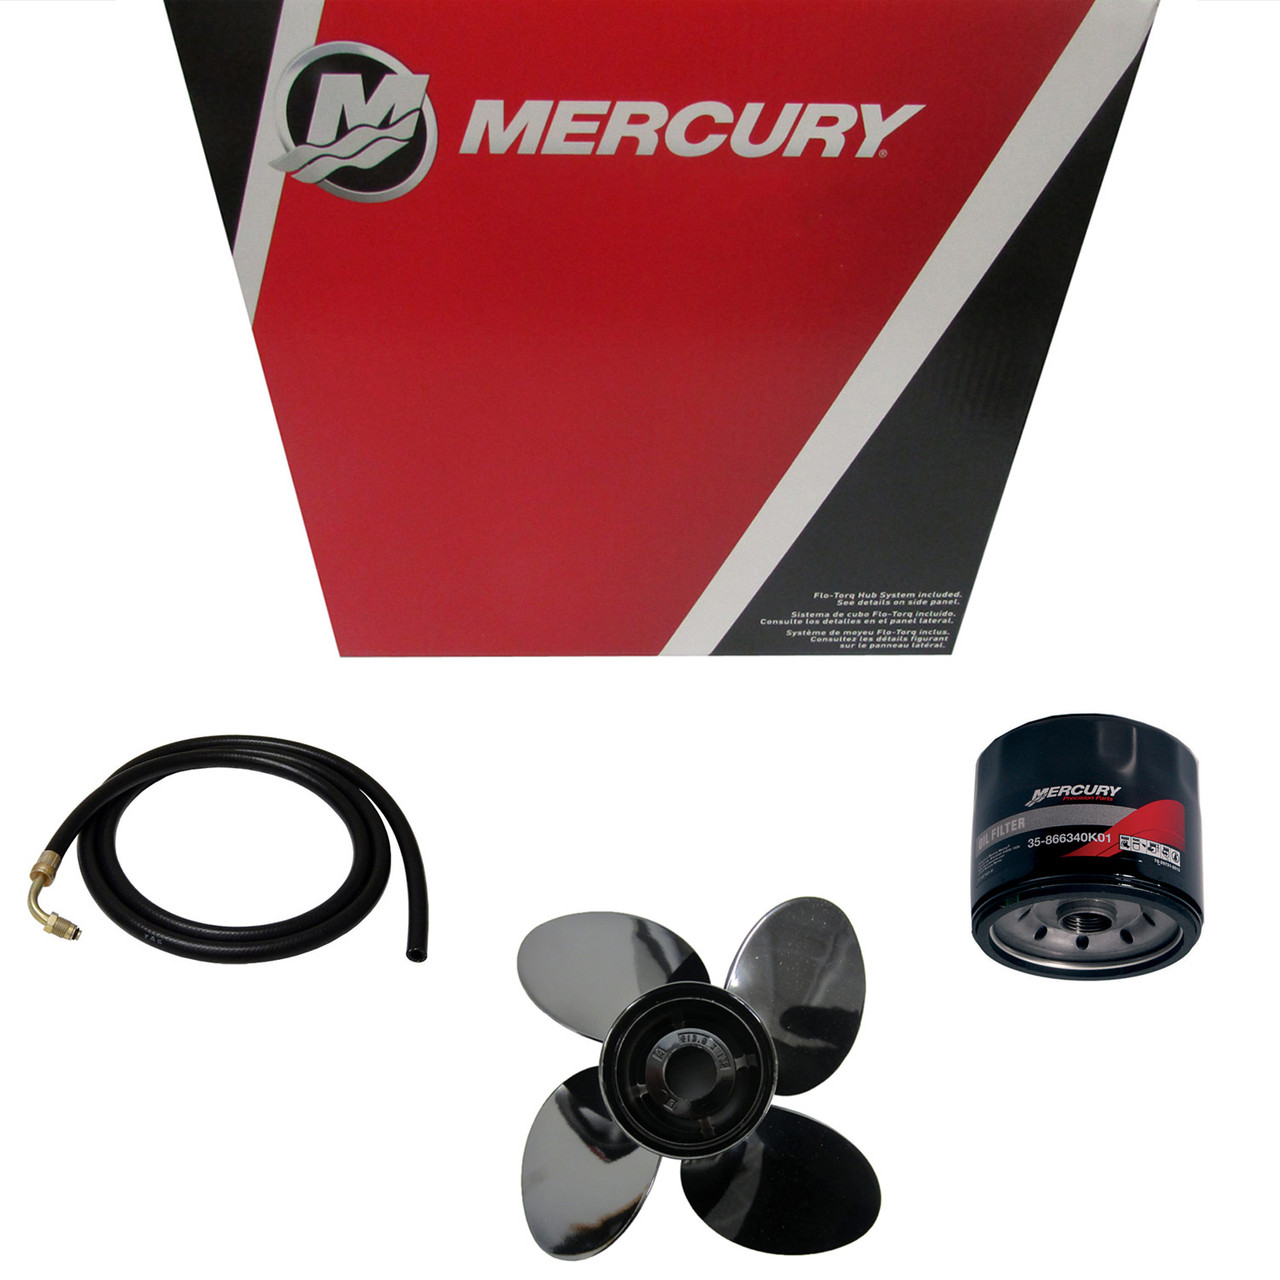 Mercury Marine/Mercruiser New OEM Harnes W/Key Swth, 84-896537K25